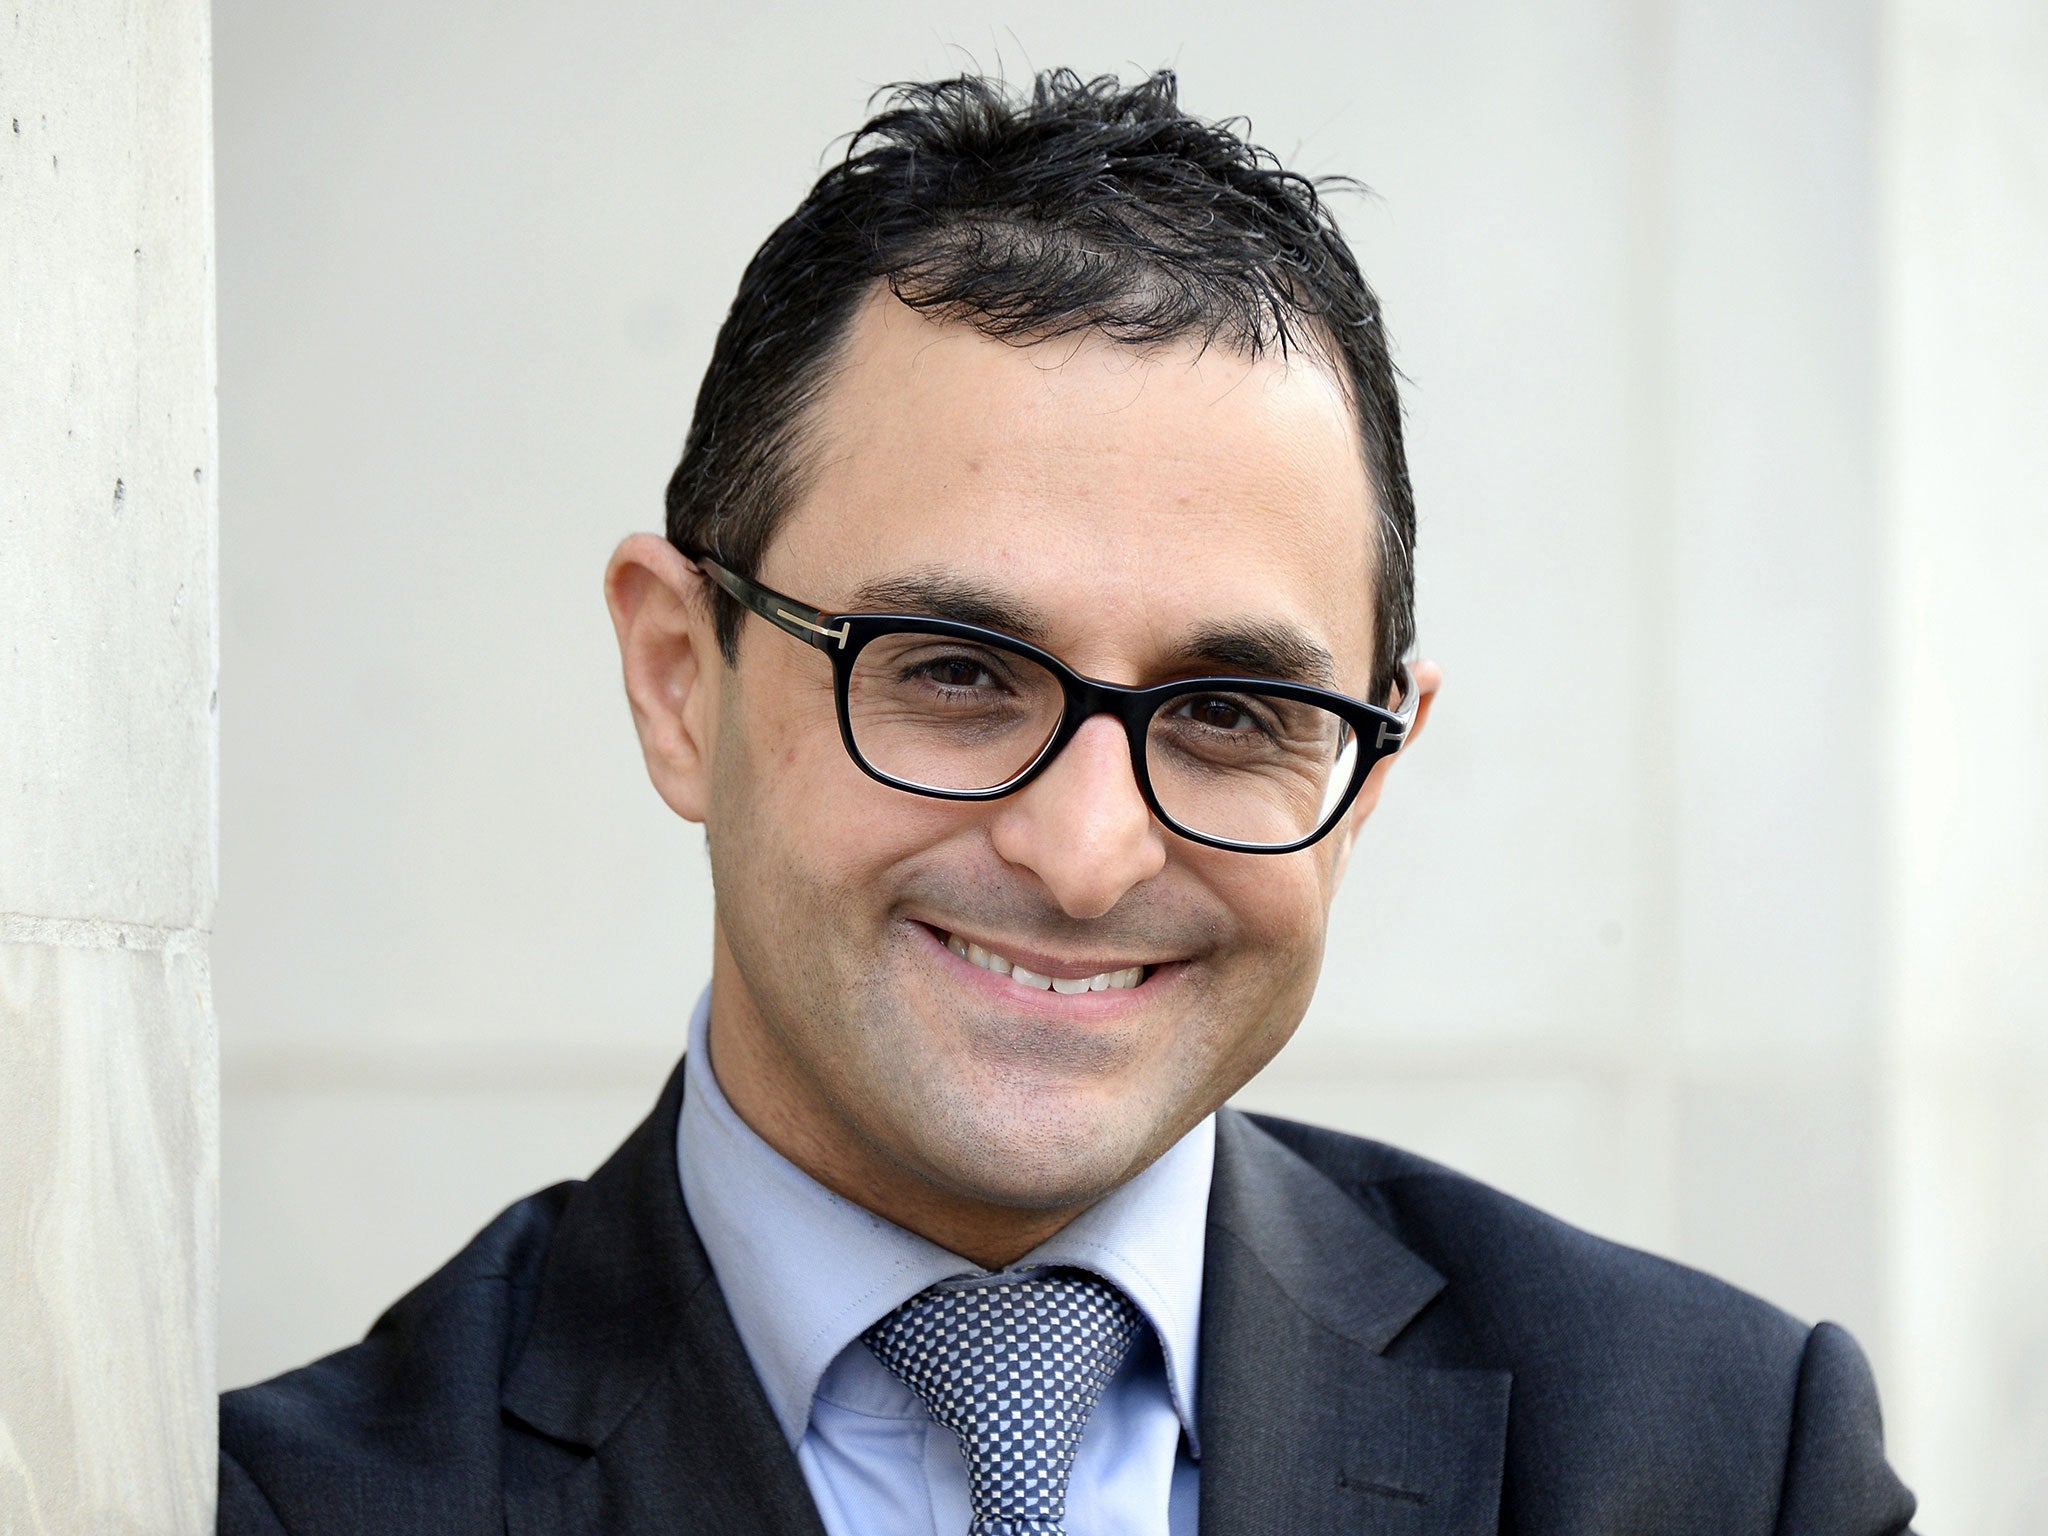 Courbevoie's right-wing local representative Arash Derambarsh poses on February 23, 2015 in Paris